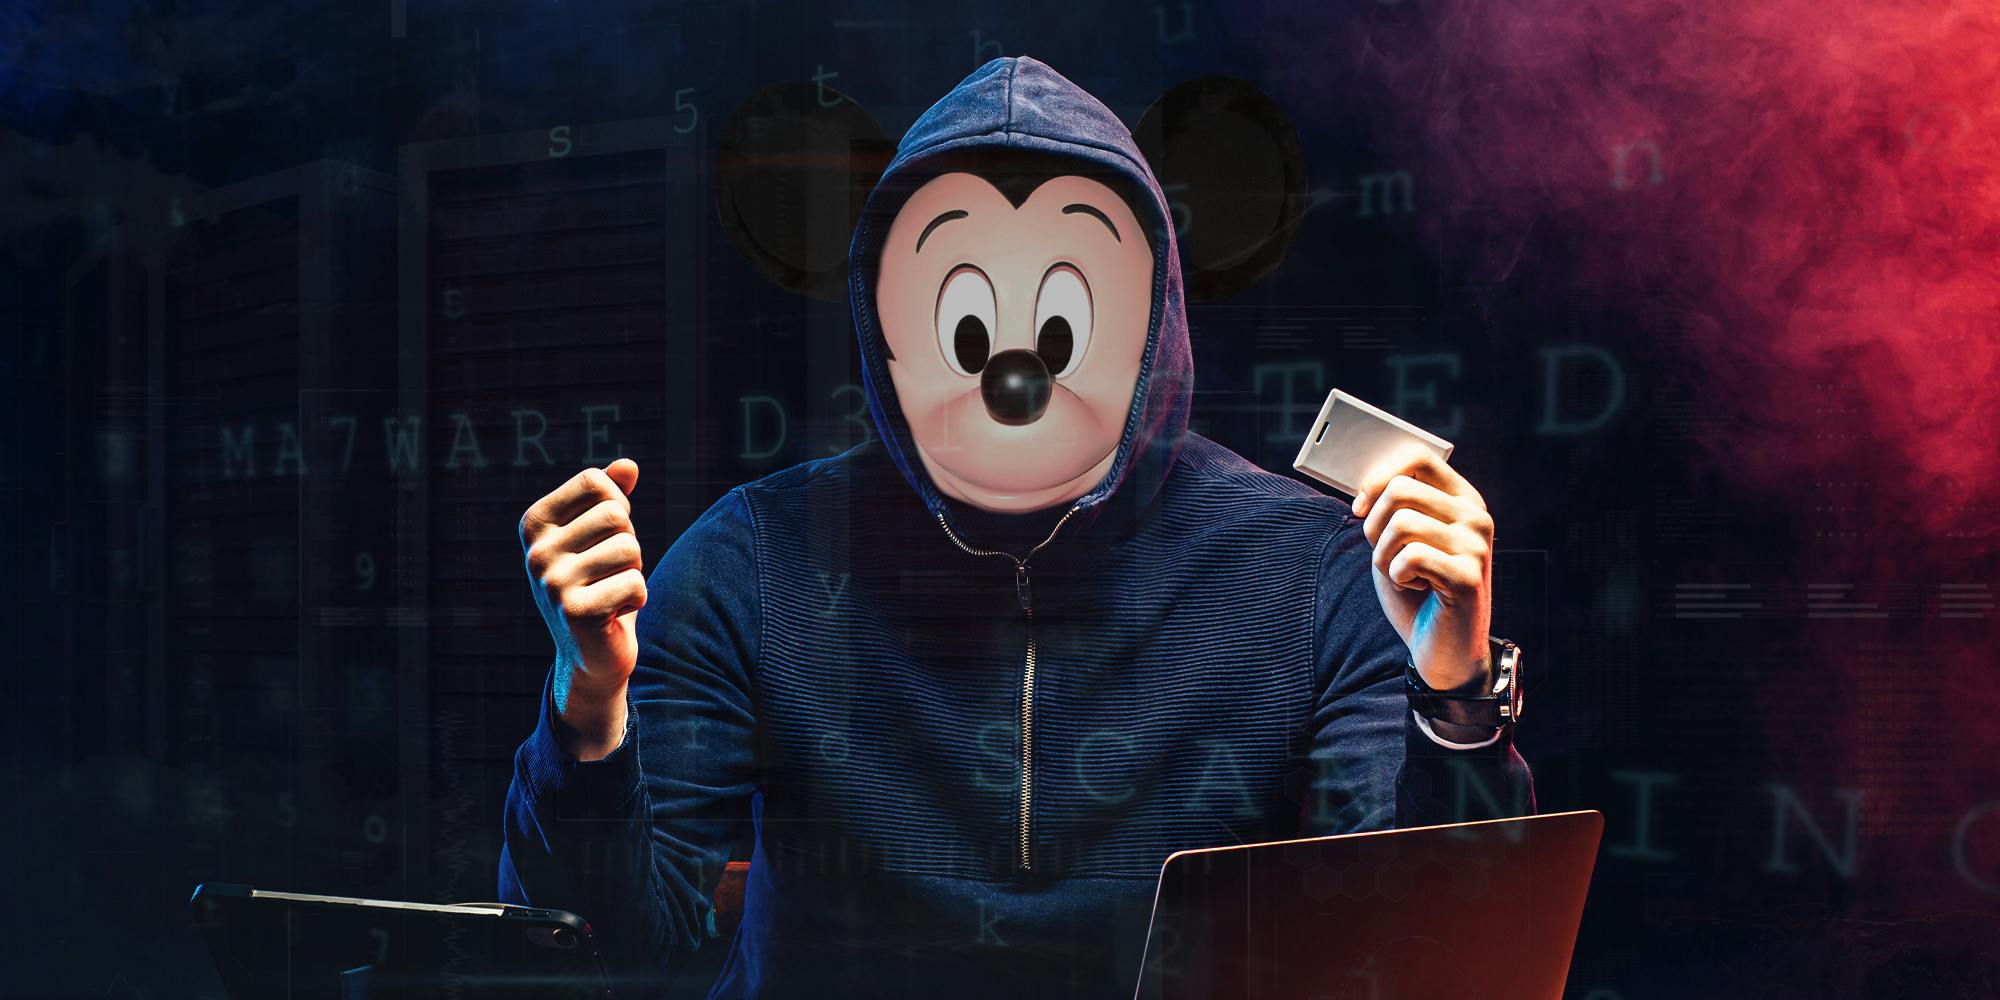 Hackers leak Disney's Slack chats